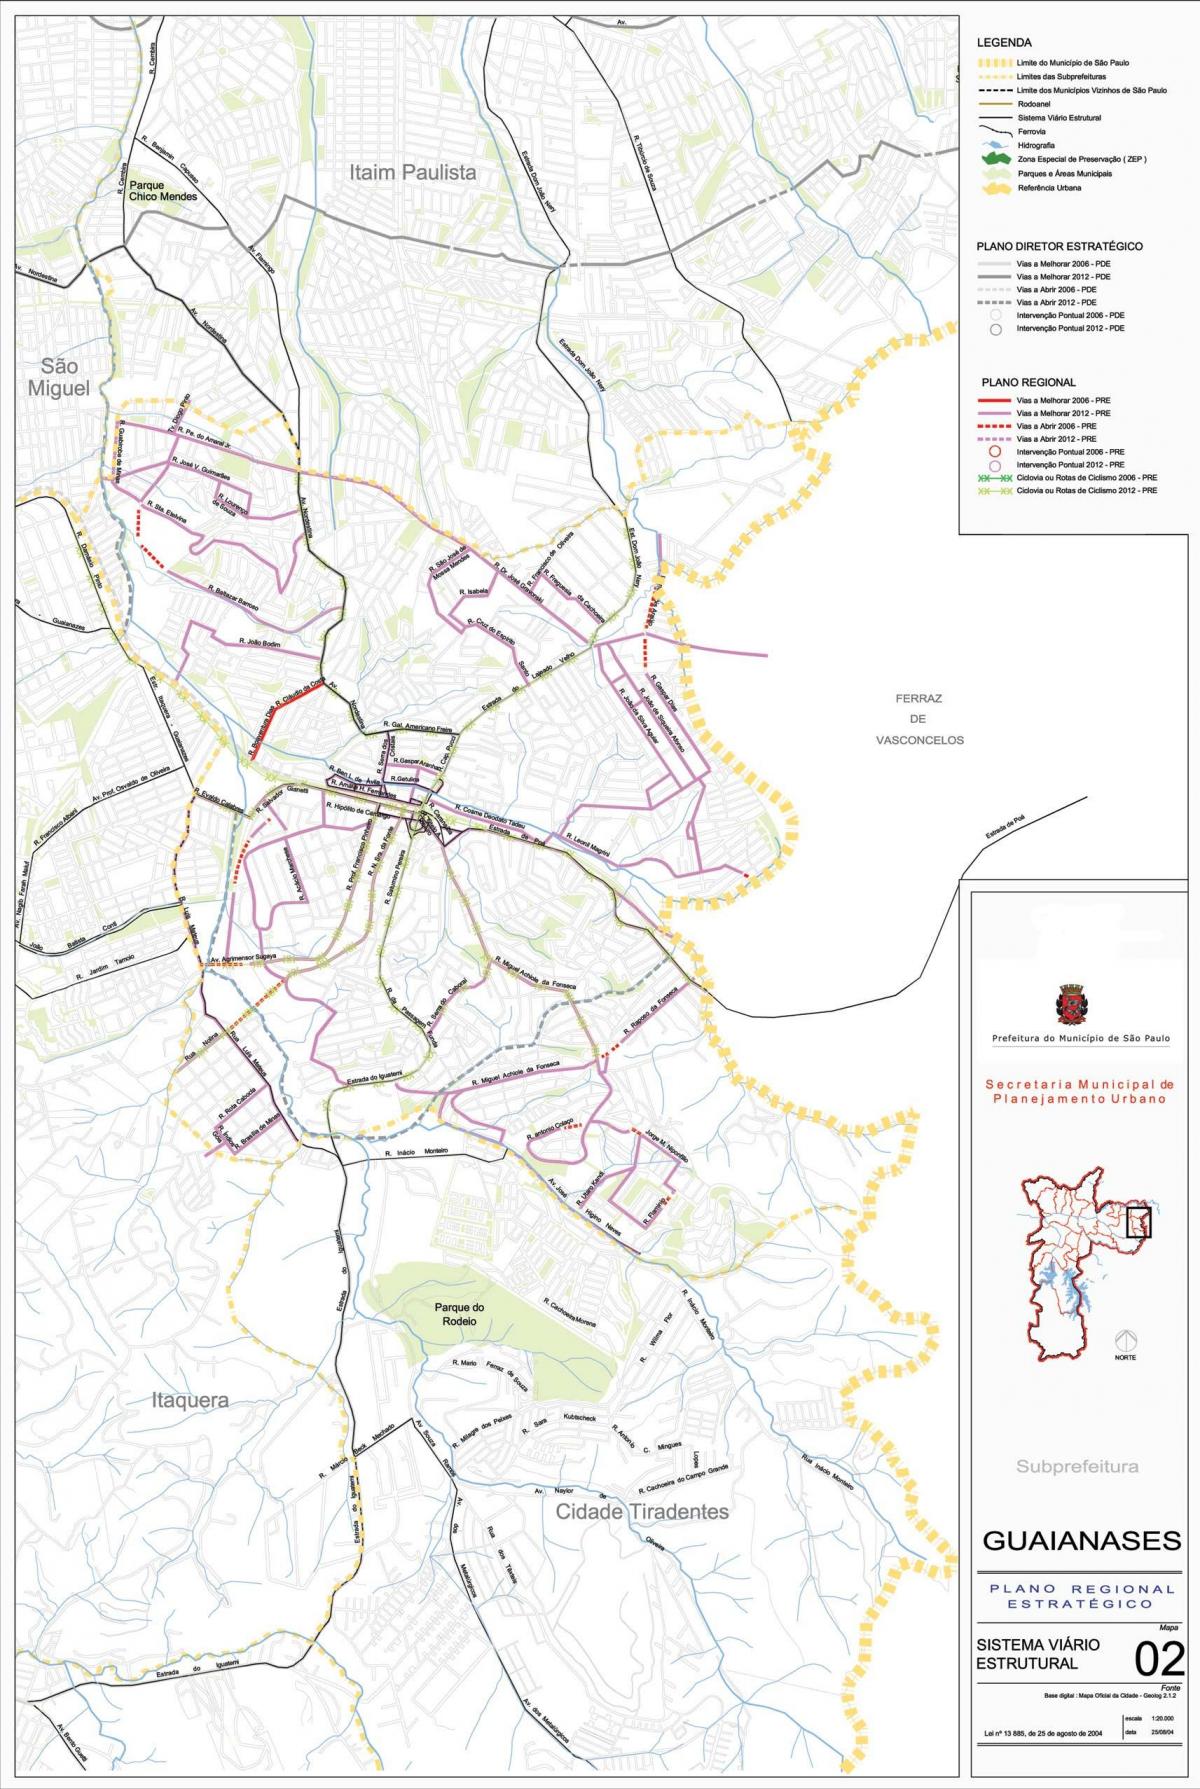 Peta dari Guaianazes Sao Paulo - Jalan